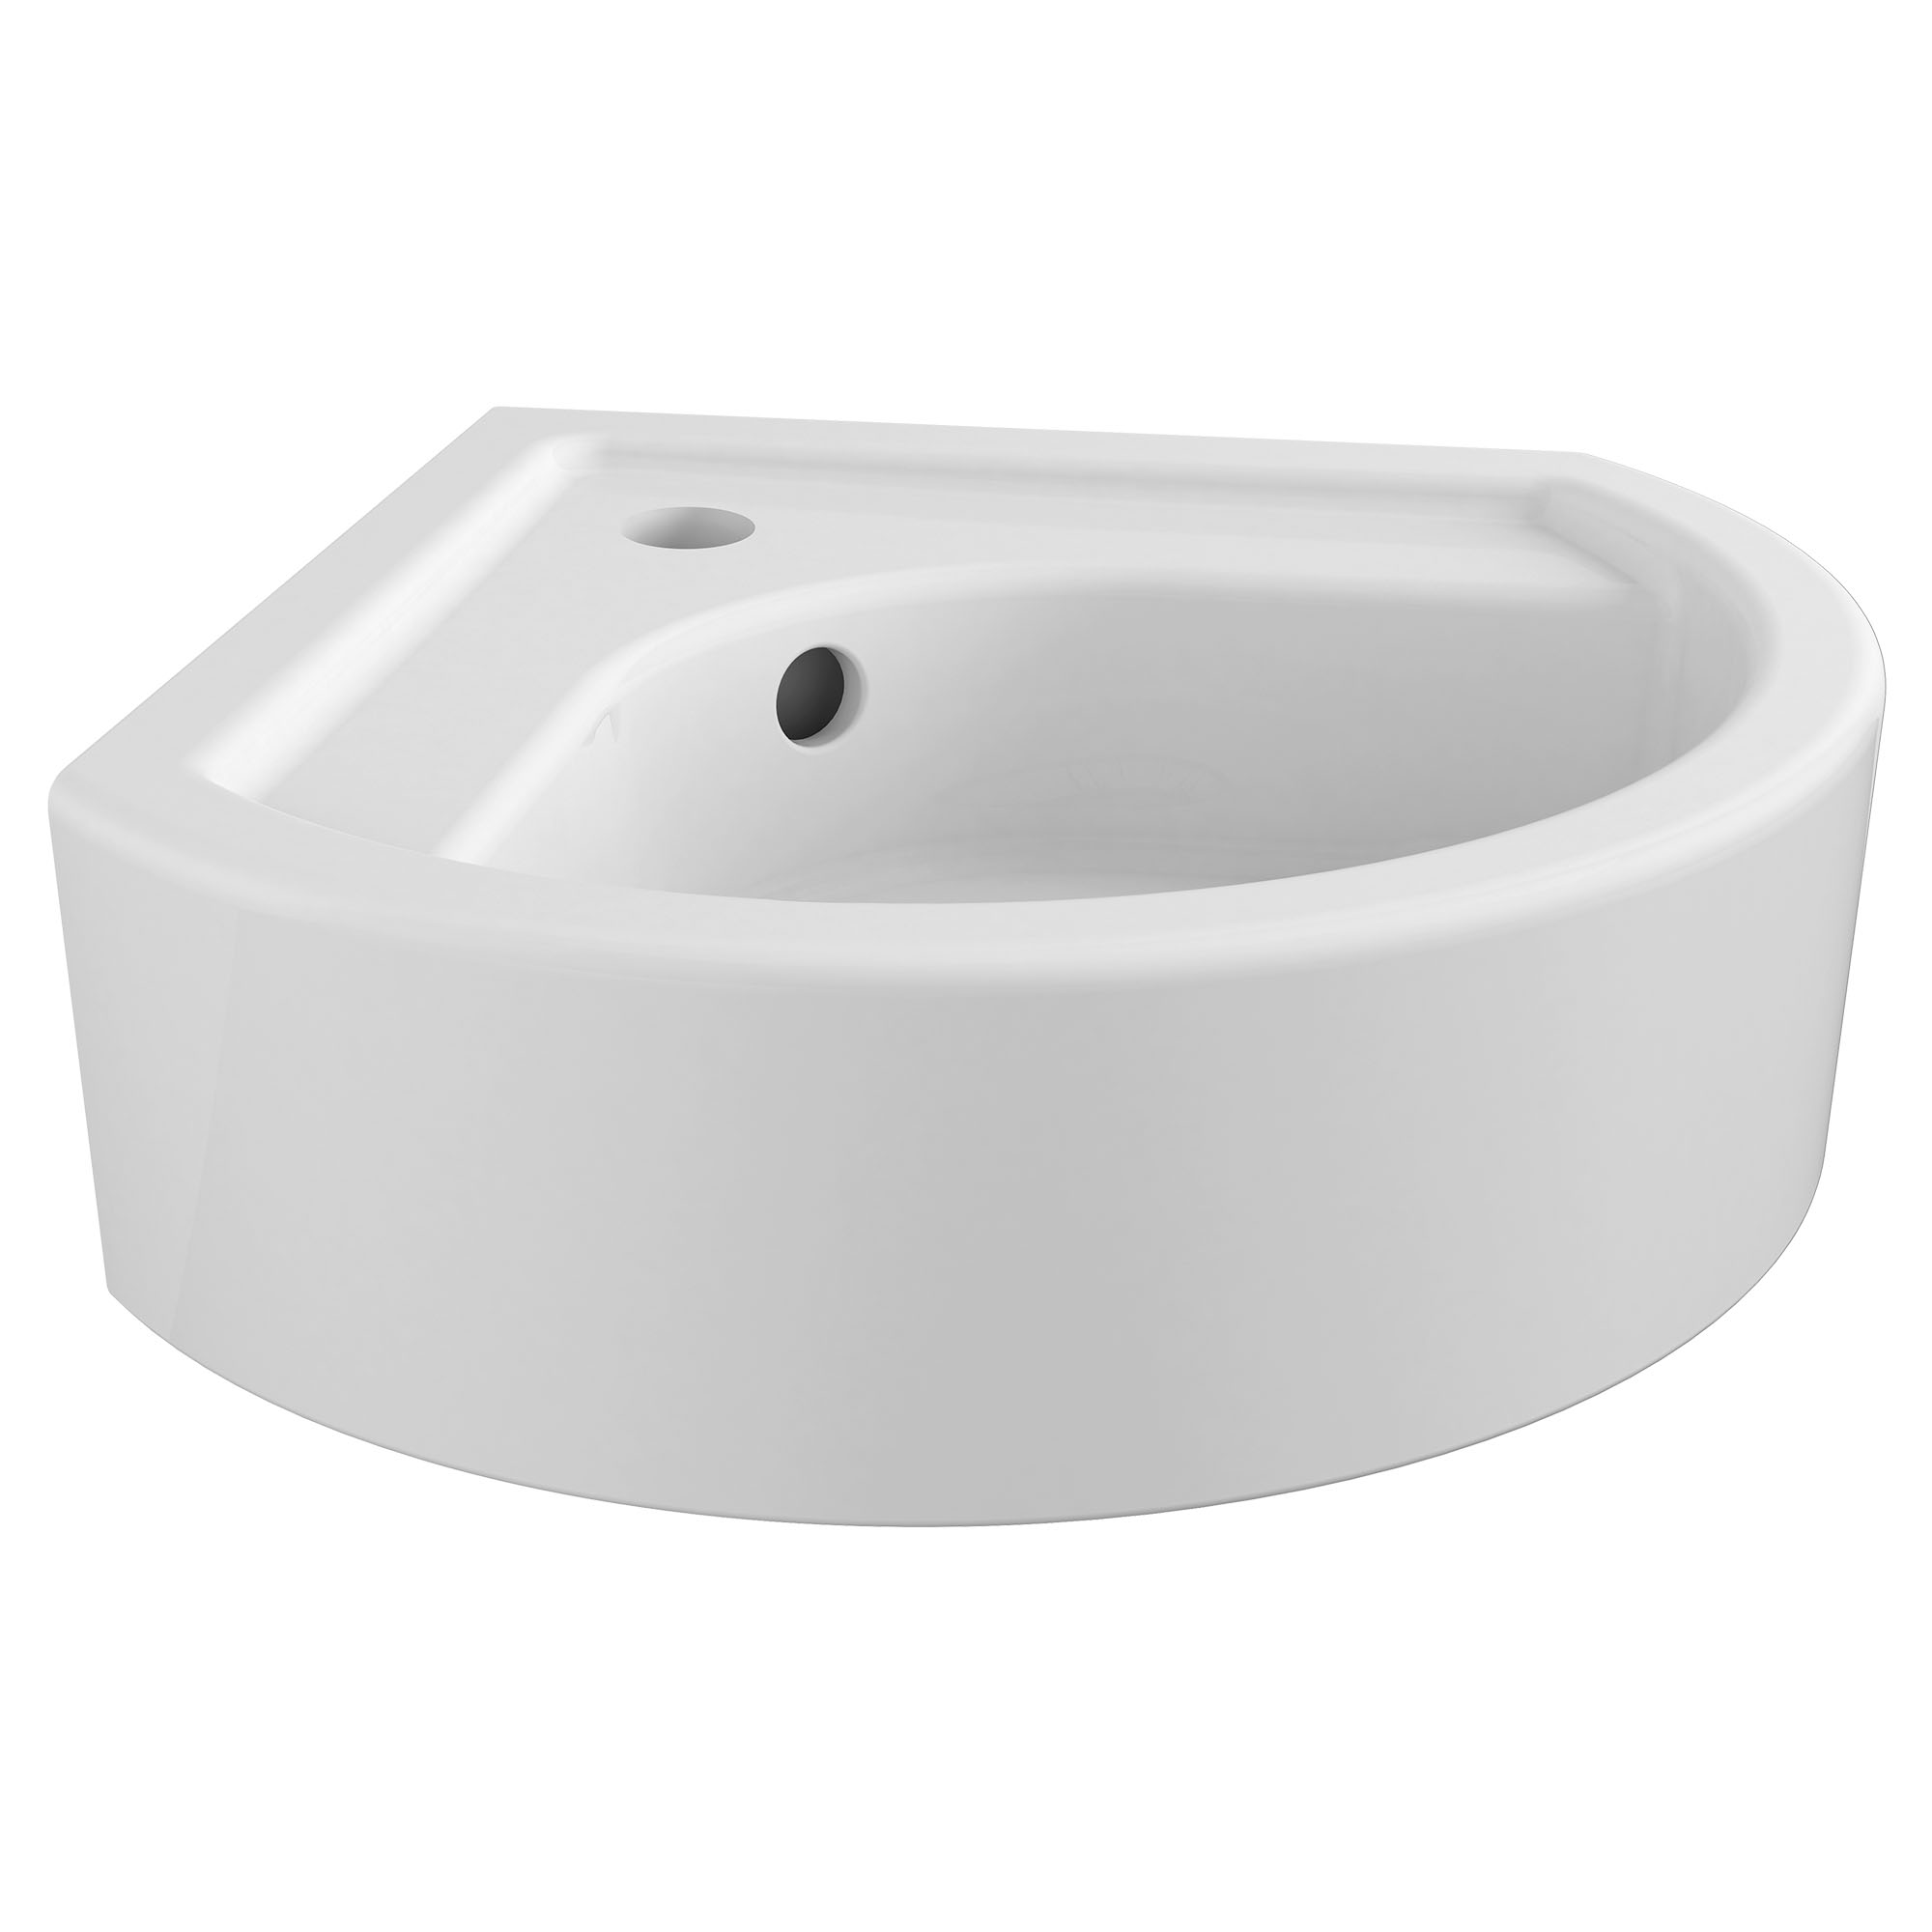 Cossu® Wall-Hung Sink, 1-Hole